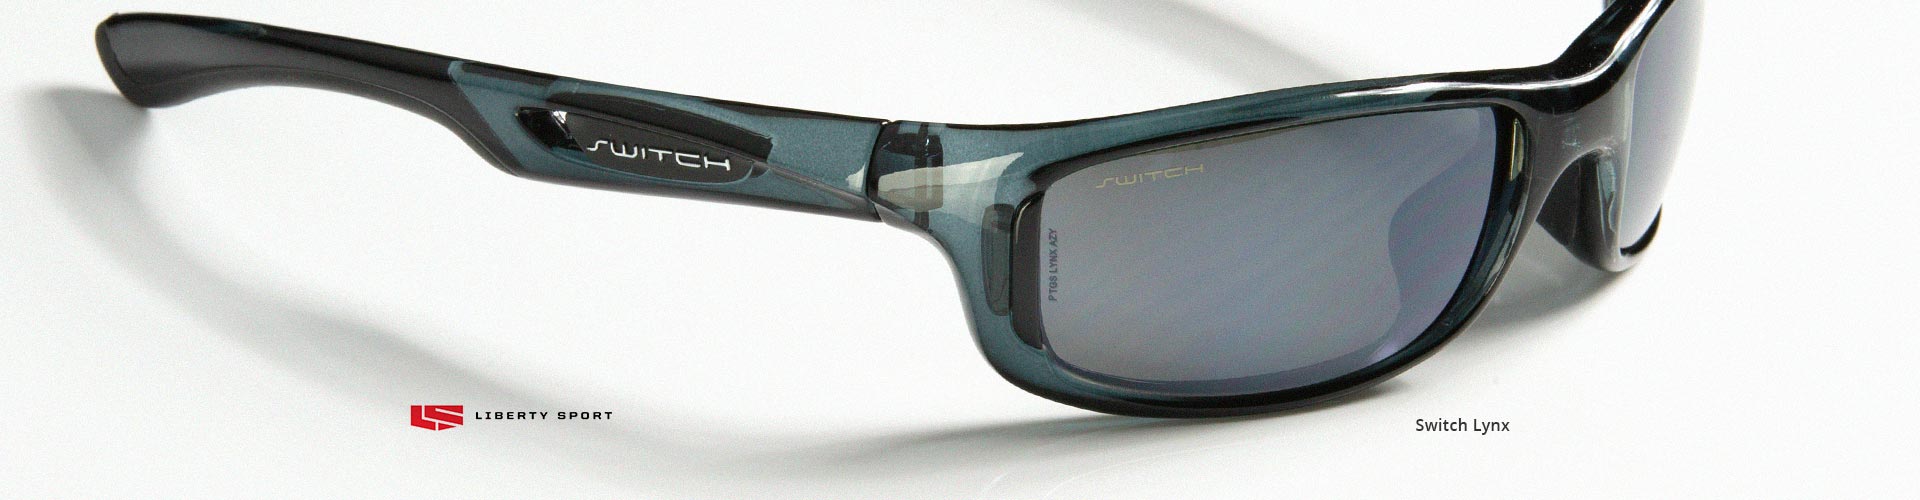 Shop Rec Specs Liberty Sport Sunglasses - model Switch Lynx featured